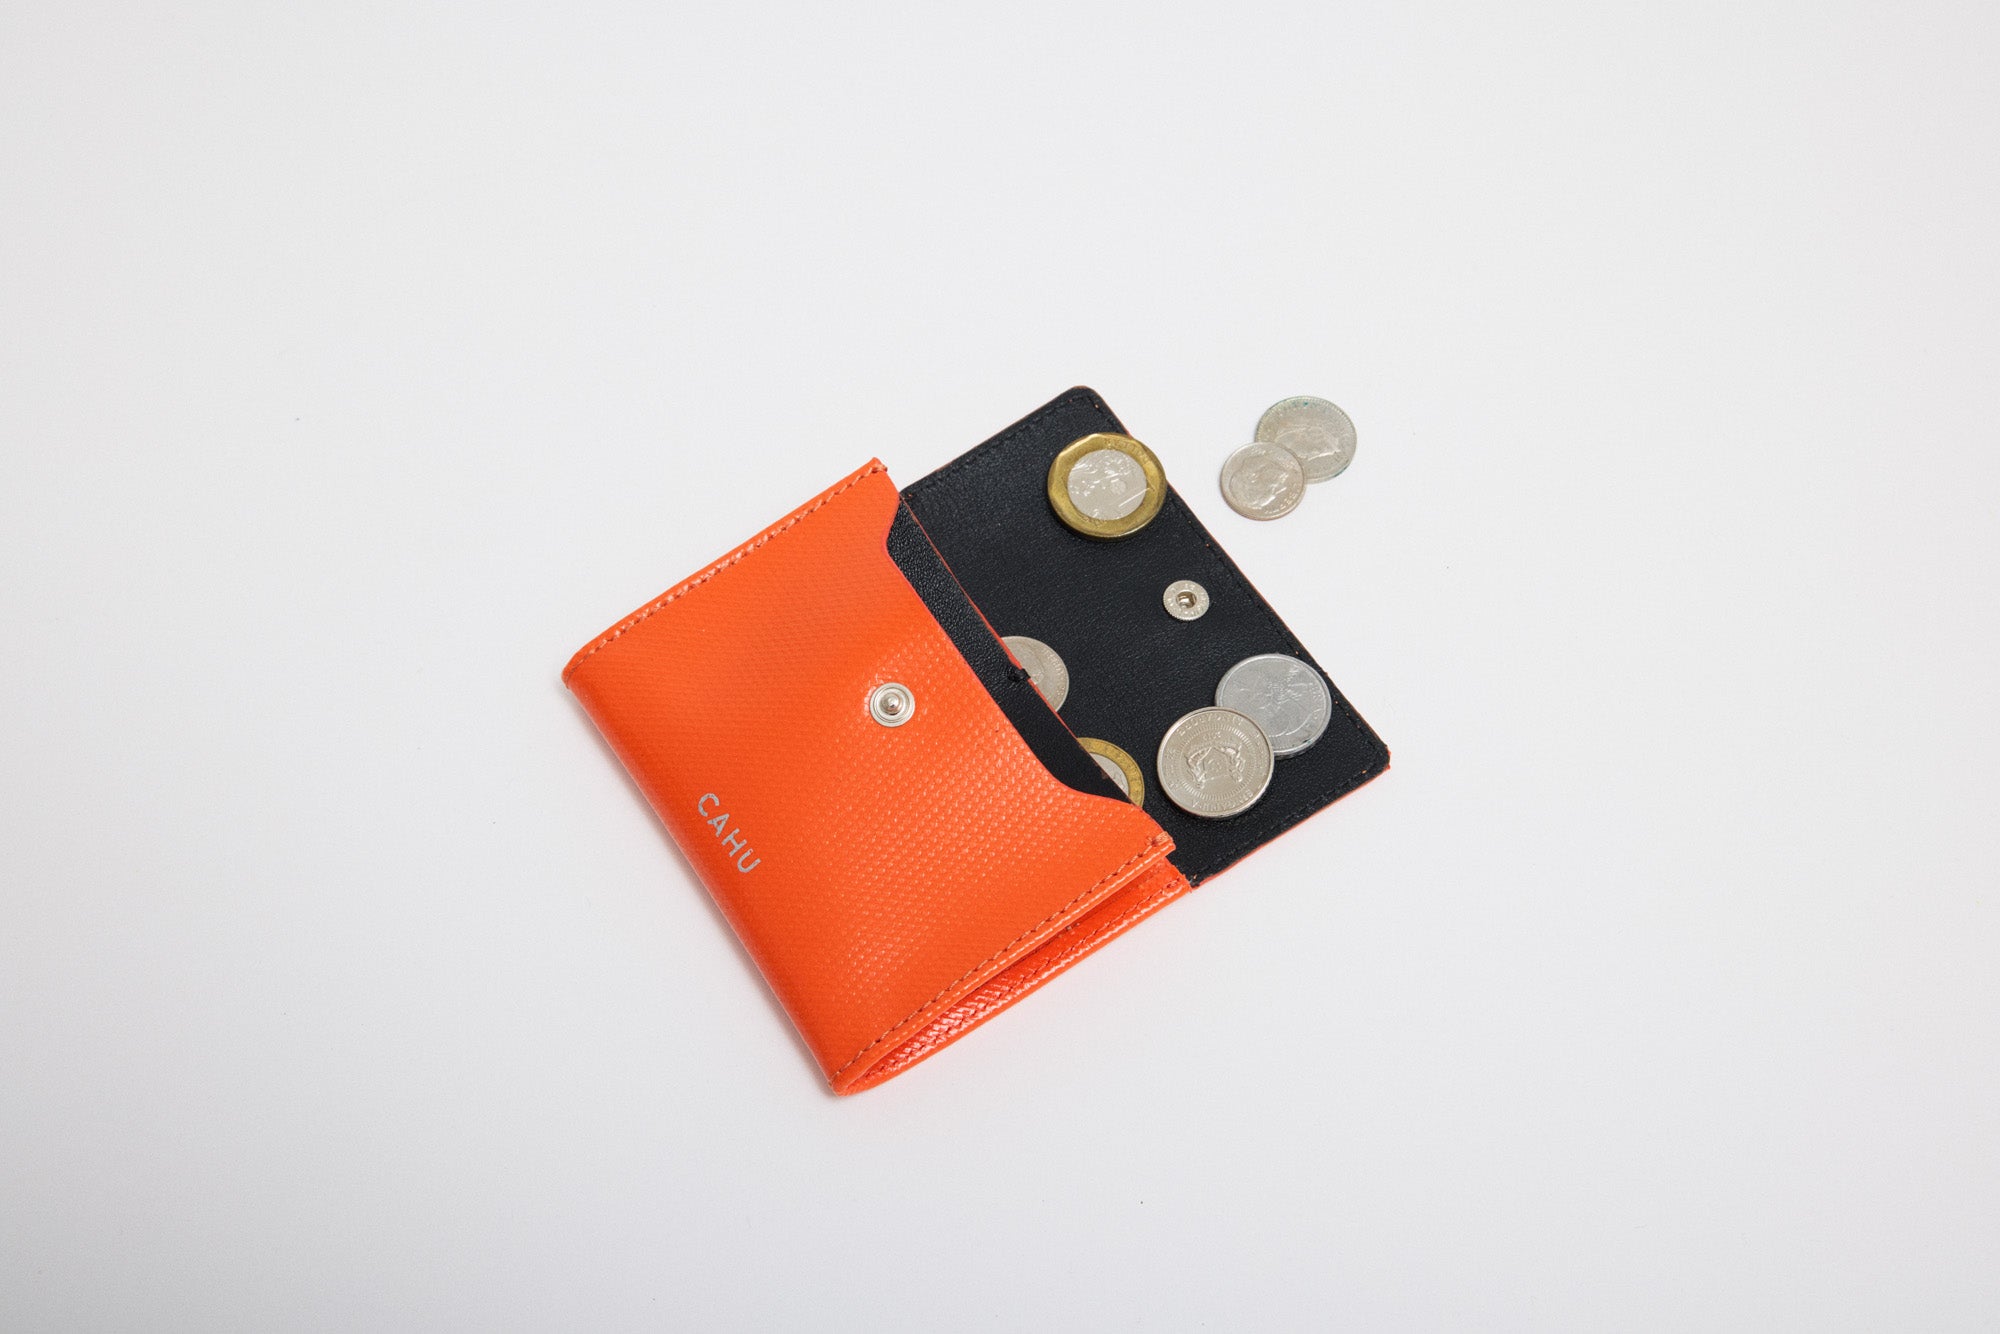 The Orange Wallet